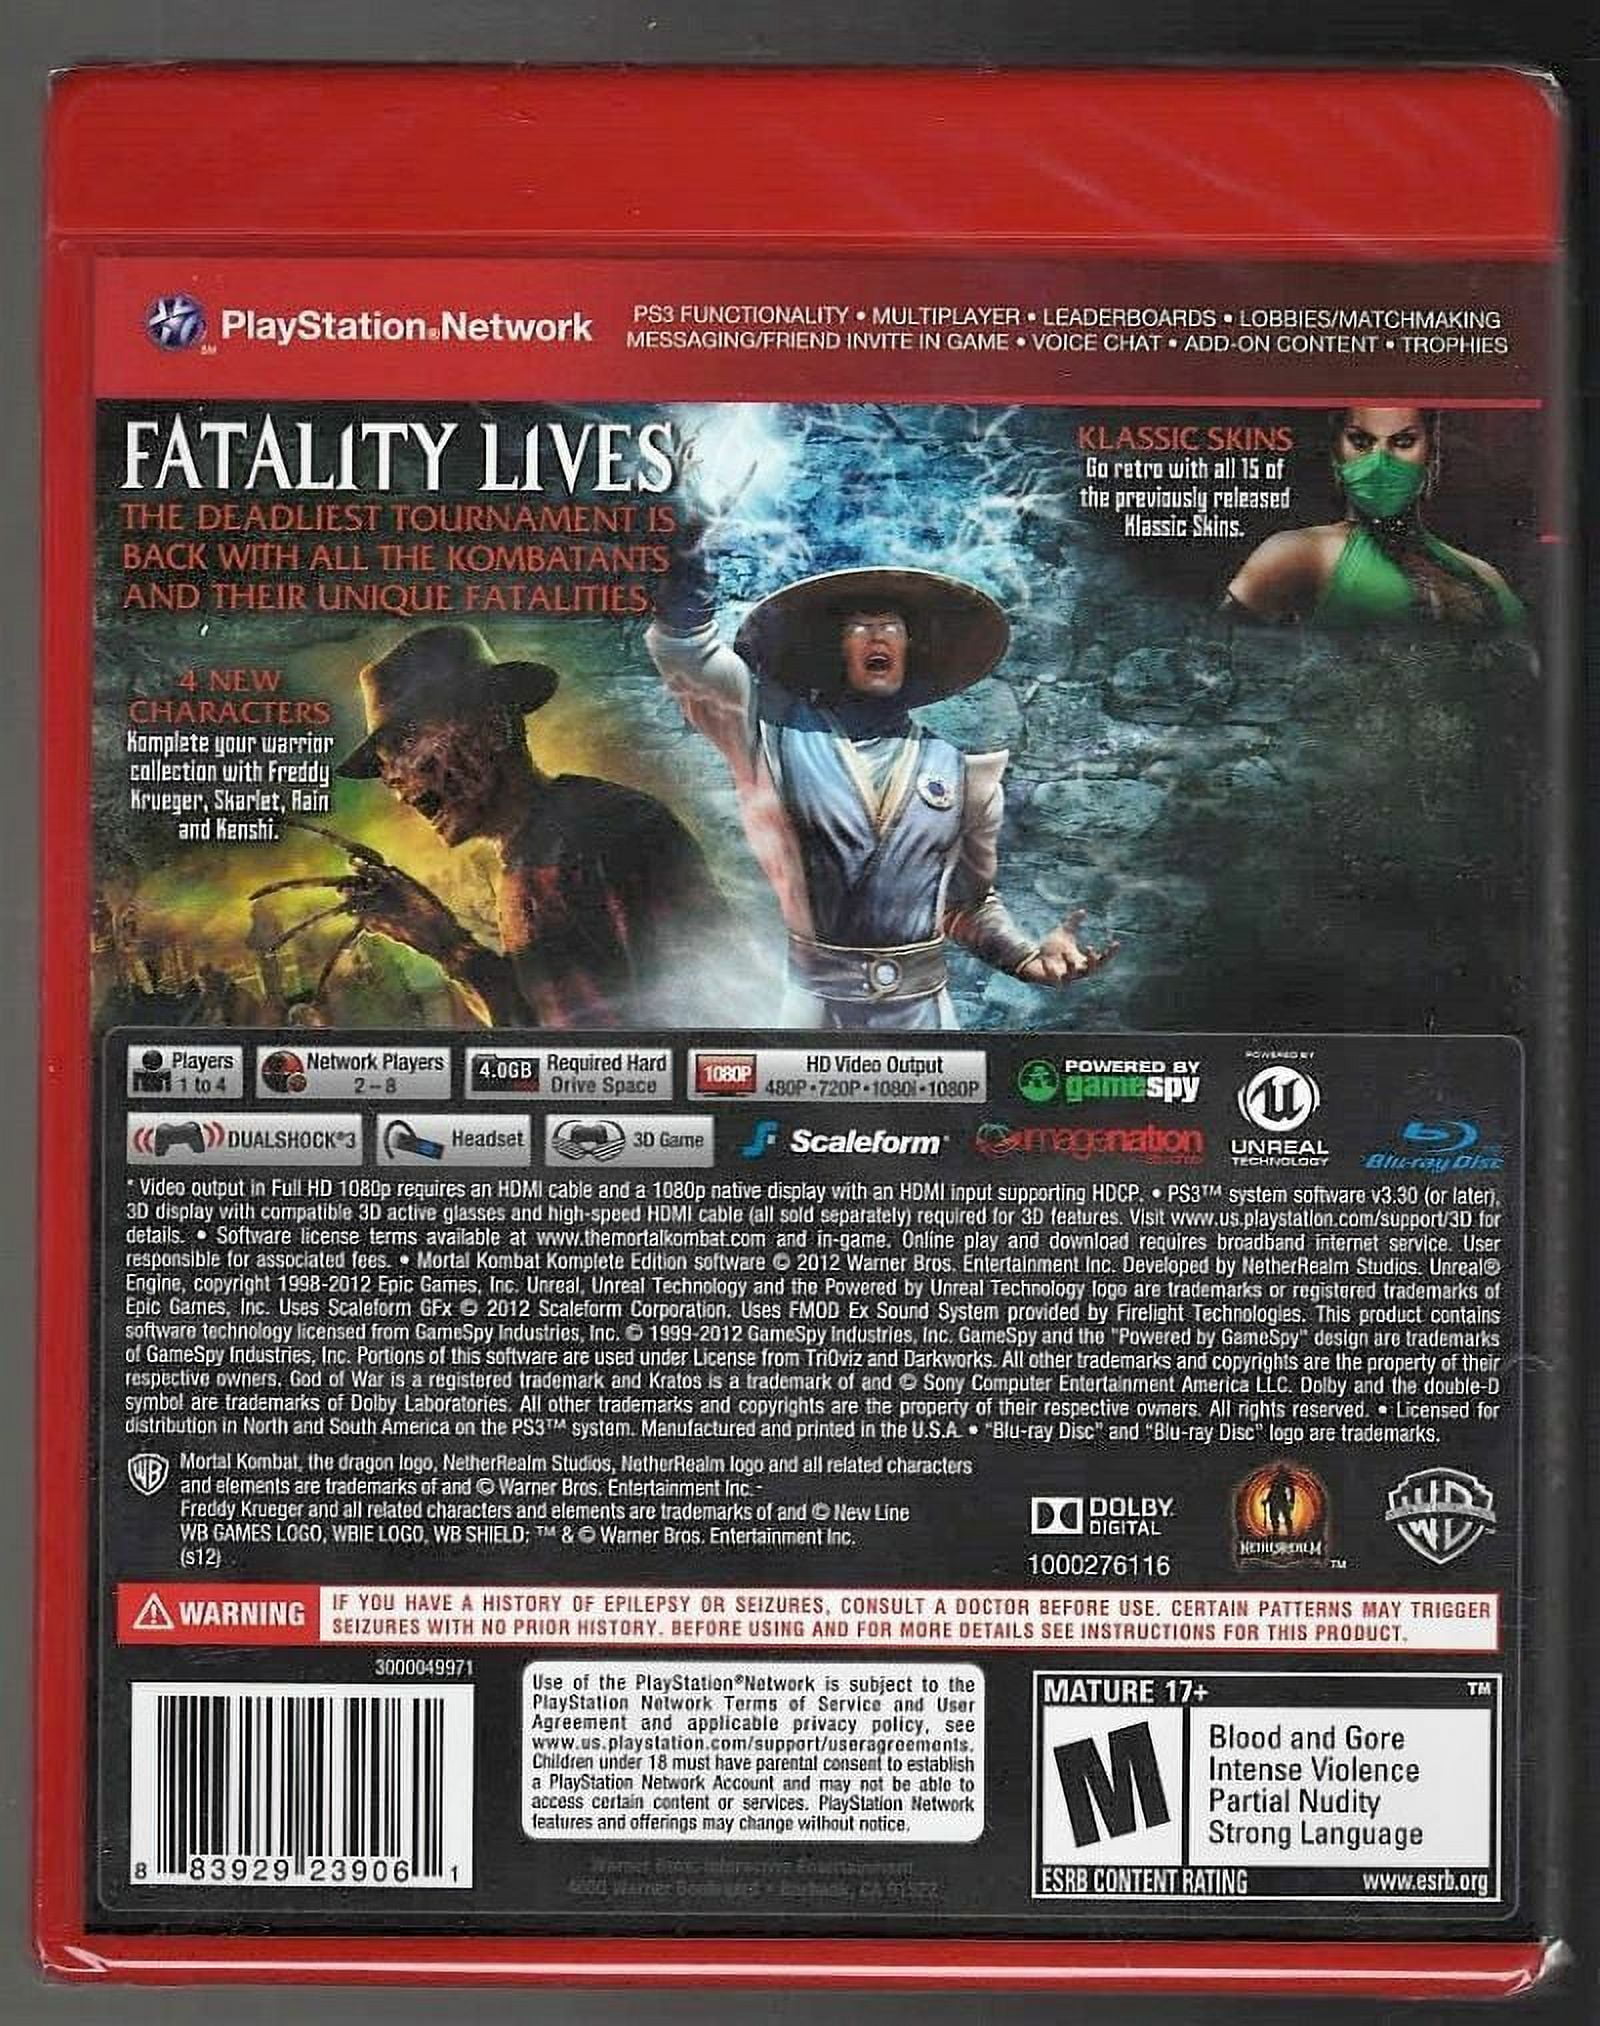 Mortal Kombat Komplete Edition (Platinum Hits) Xbox 360 (Brand New Factory  Seale 883929239054